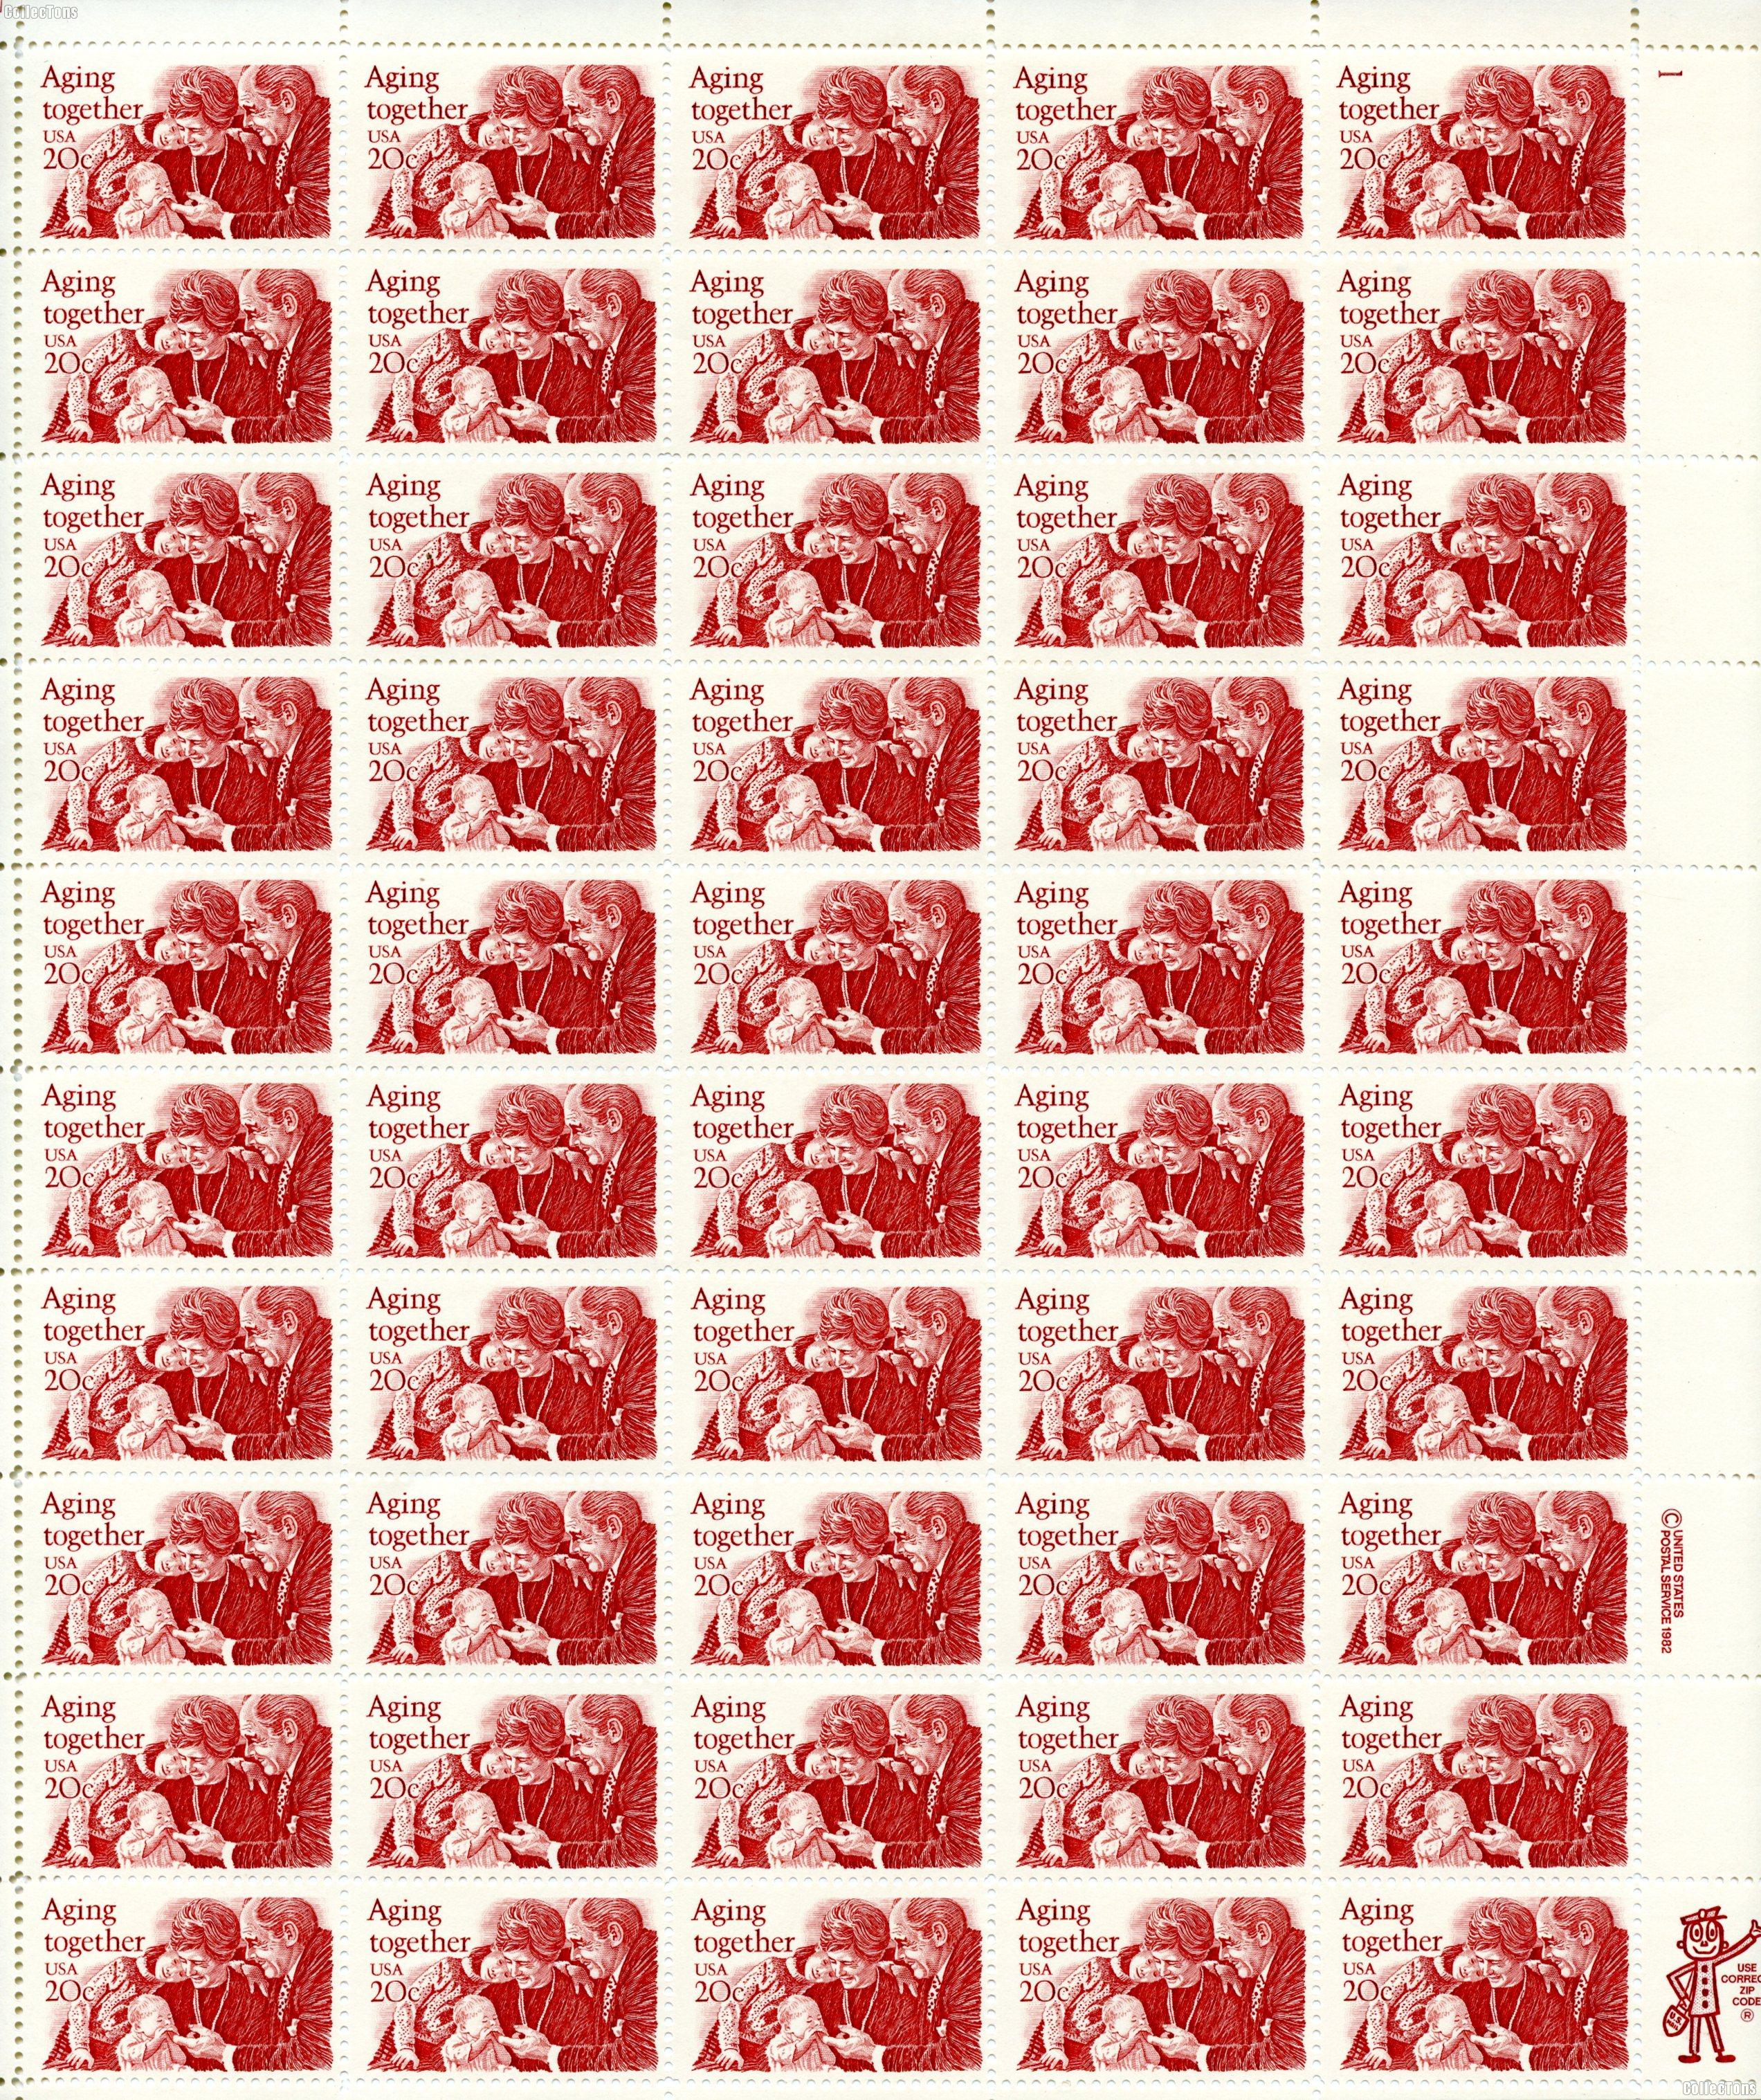 1982 Aging Together 20 Cent US Postage Stamp MNH Sheet of 50 Scott #2011